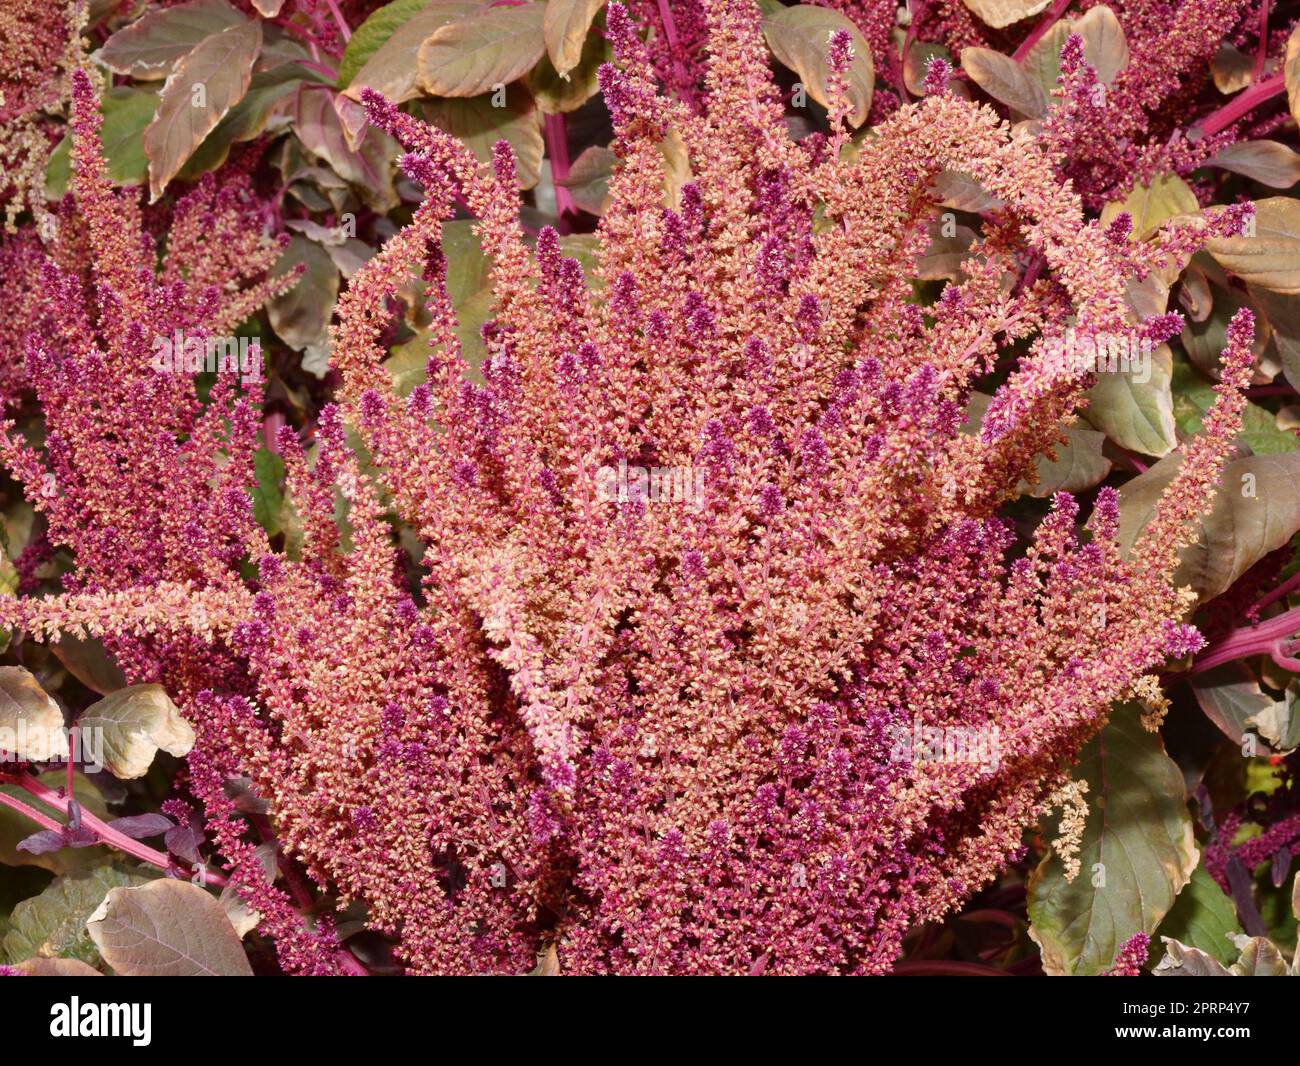 Spike-paniculate inflorescences of Amaranth (Latin. Amaranthus) or Schiritsa Stock Photo